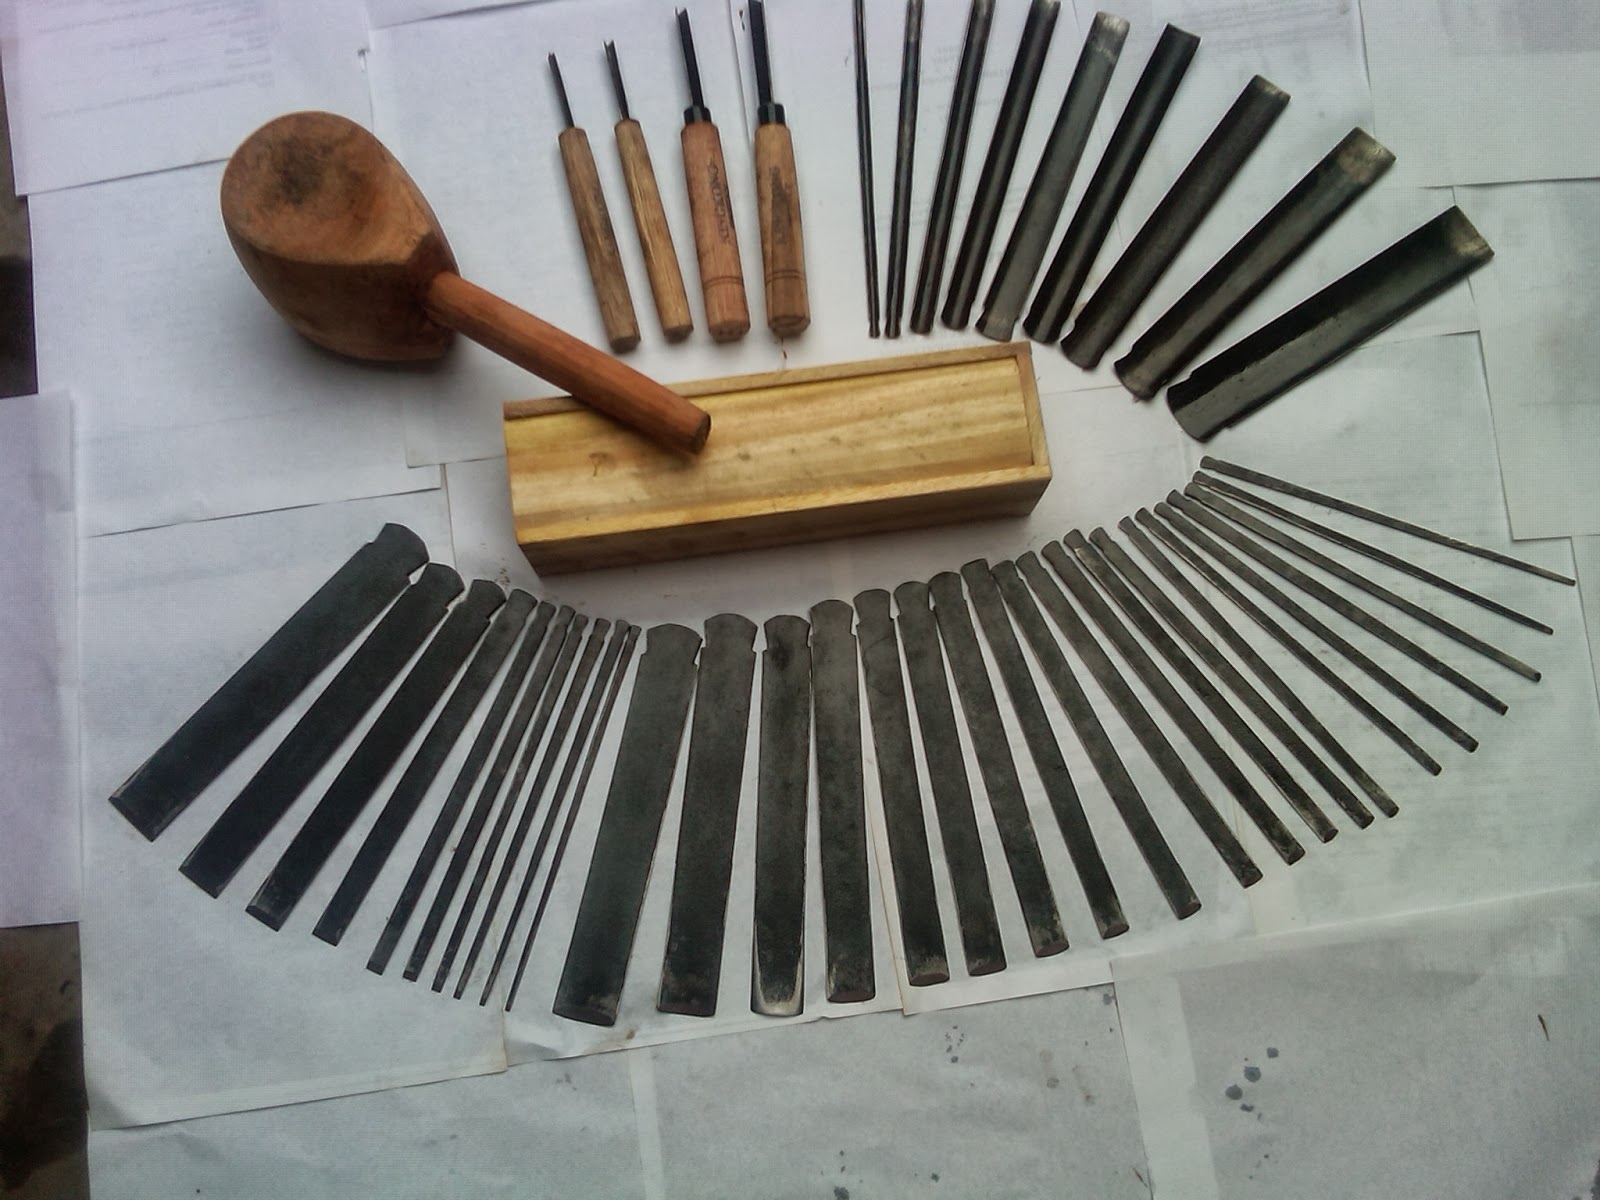  alat  untuk membuat  kerajinan  kayu  toko besi dan alat  